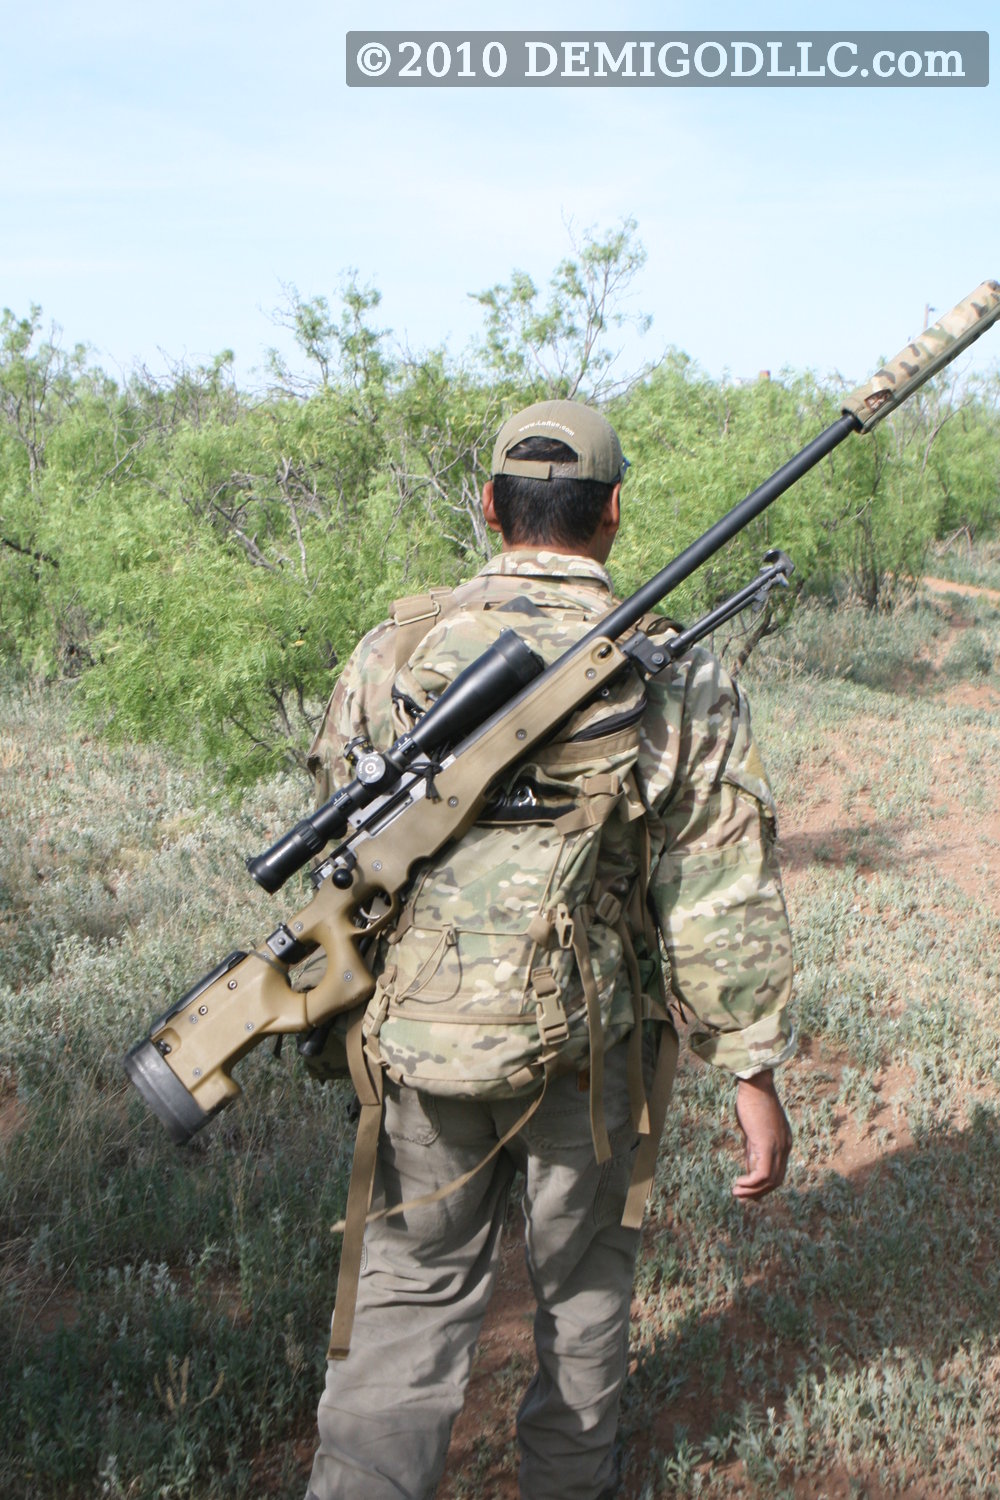 2010 Steel Safari Rifle Match
, photo 